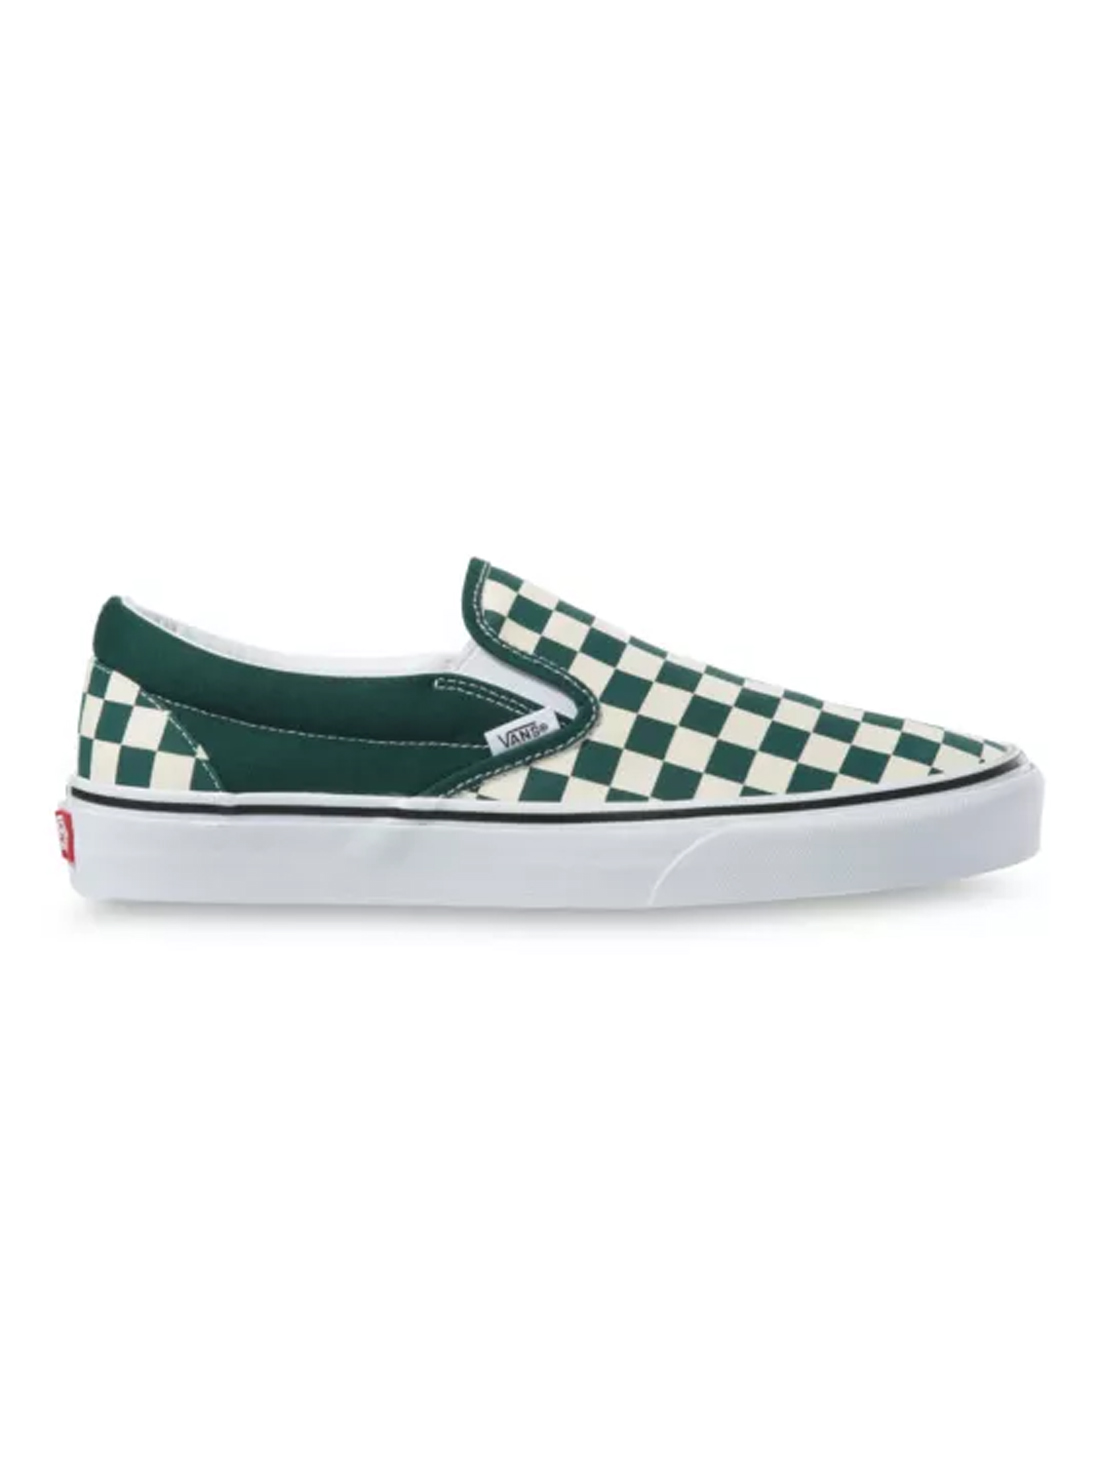 Vans Checkerboard Classic Slip On - Bistro Green / True White